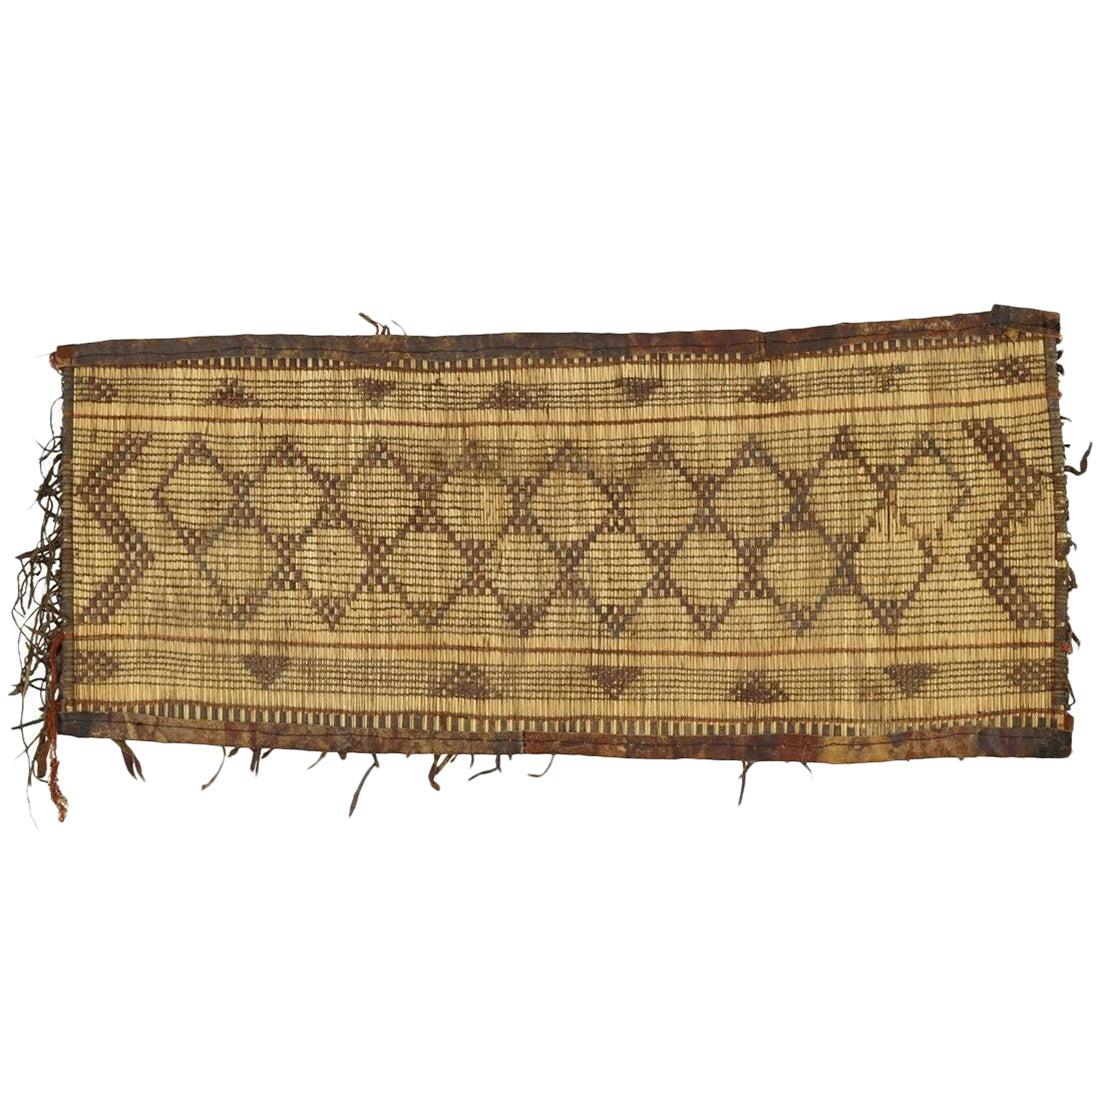 Large African Tuareg woven straw leather carpet mat Old Niger Mali Sahara desert - Tribalgh